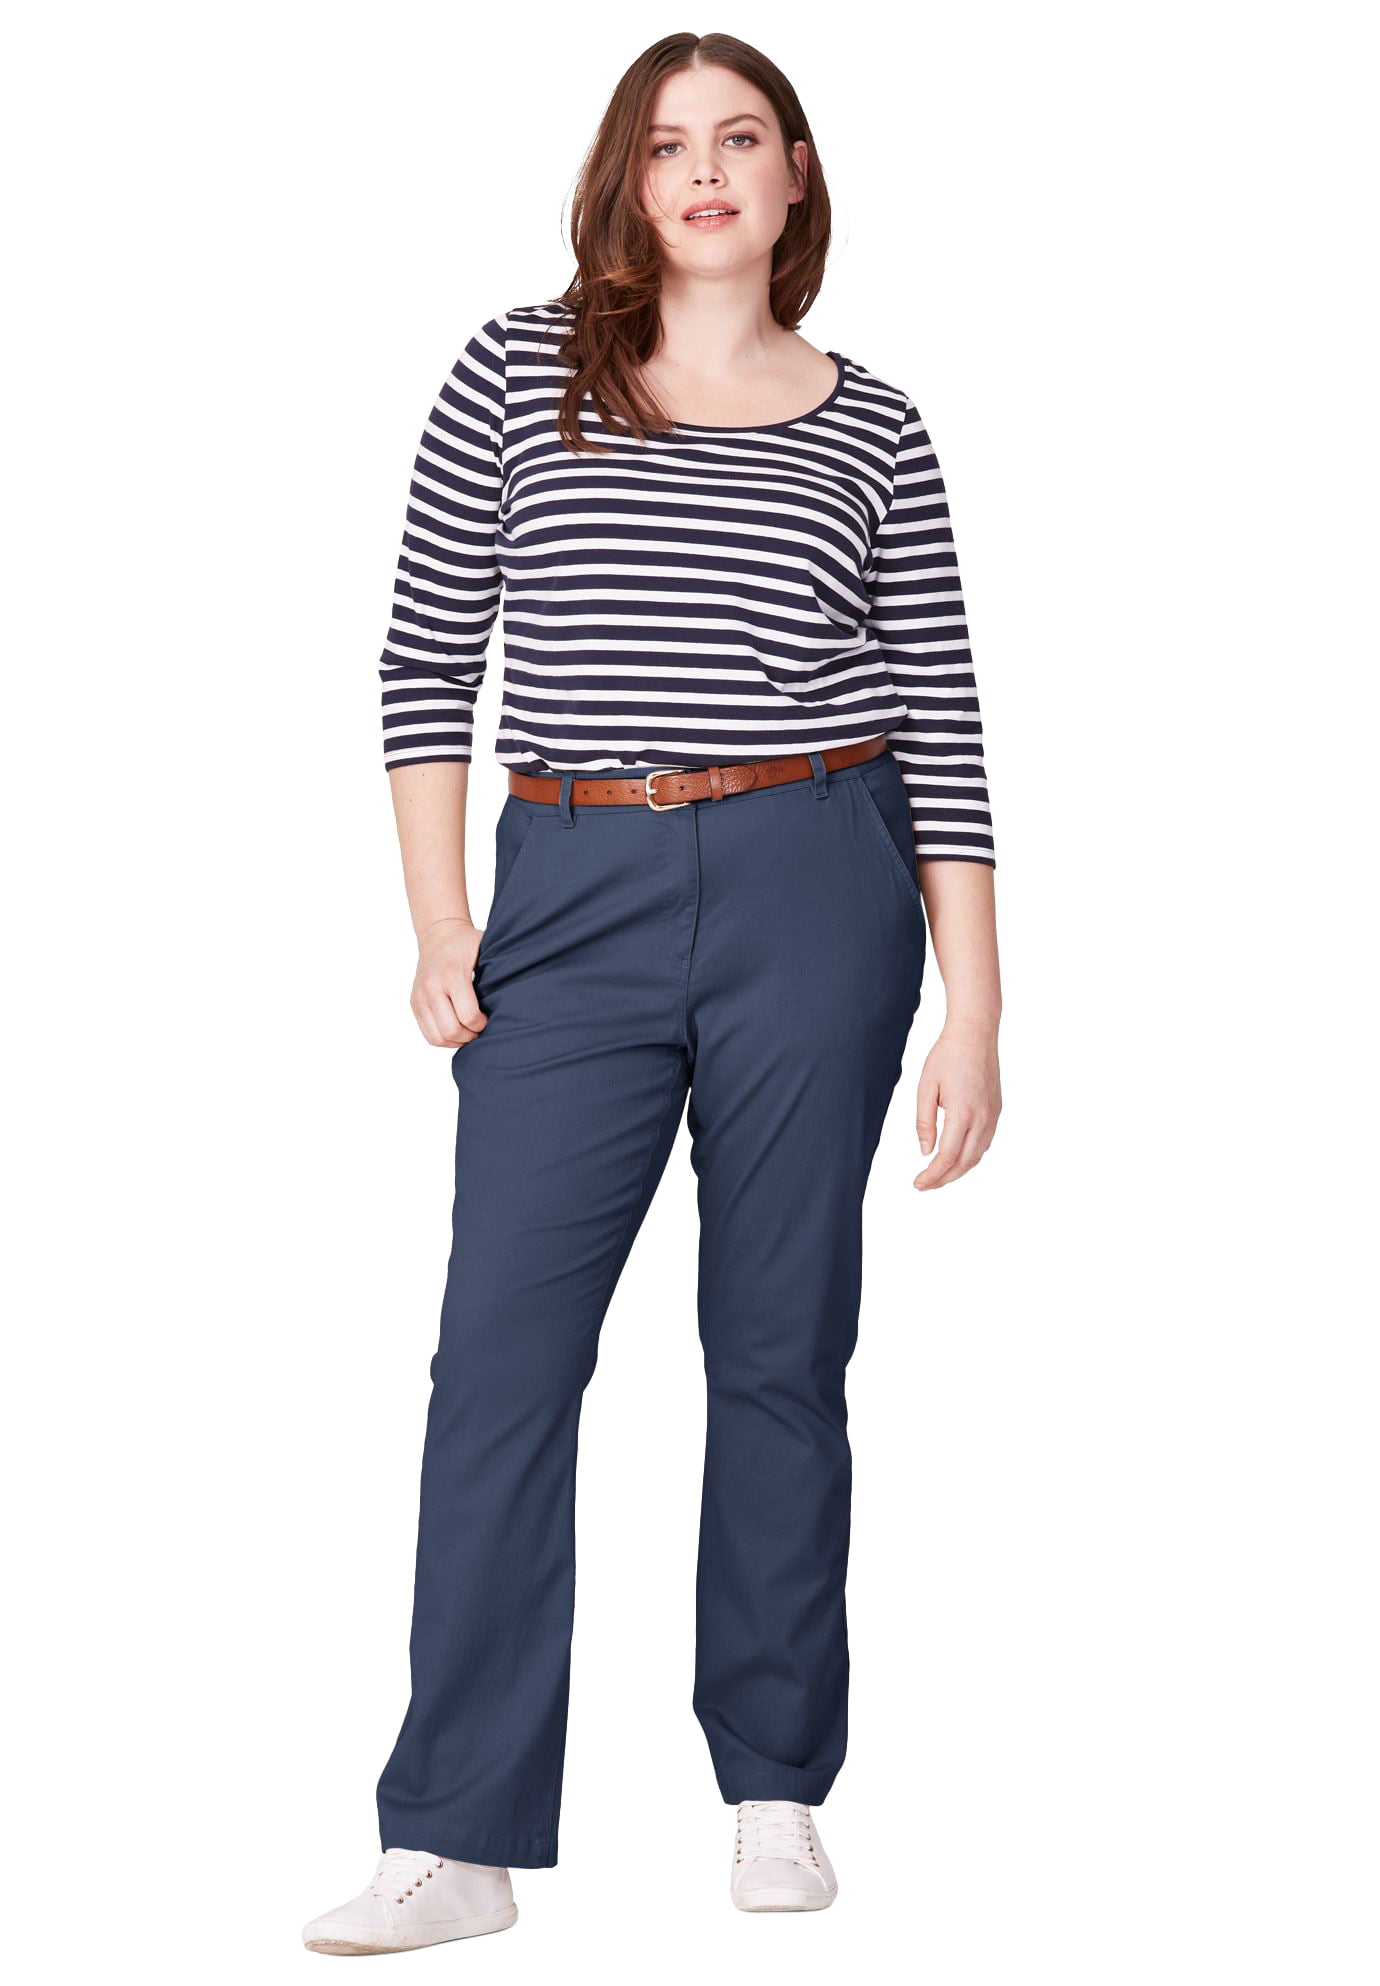 Ellos - Ellos Women's Plus Size Classic Chino Pants Pants - Walmart.com ...